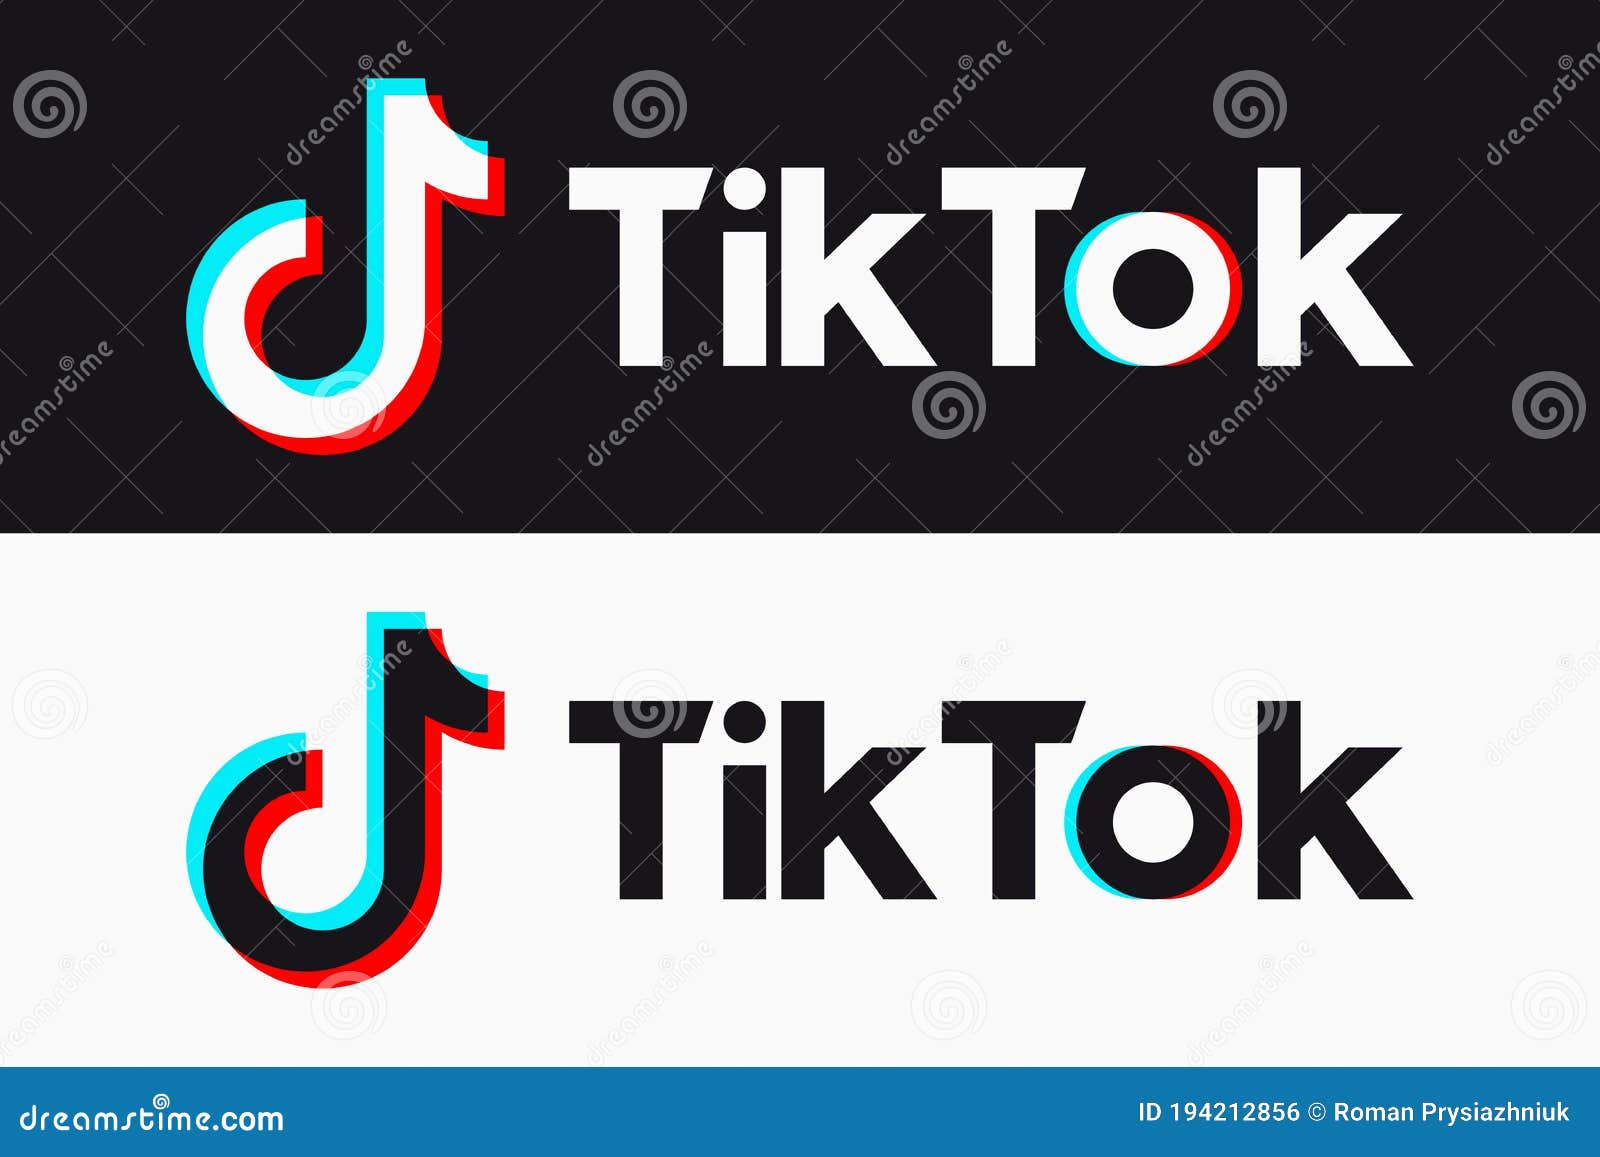 TikTok Icon. TikTok - Service for Creating and Viewing Short